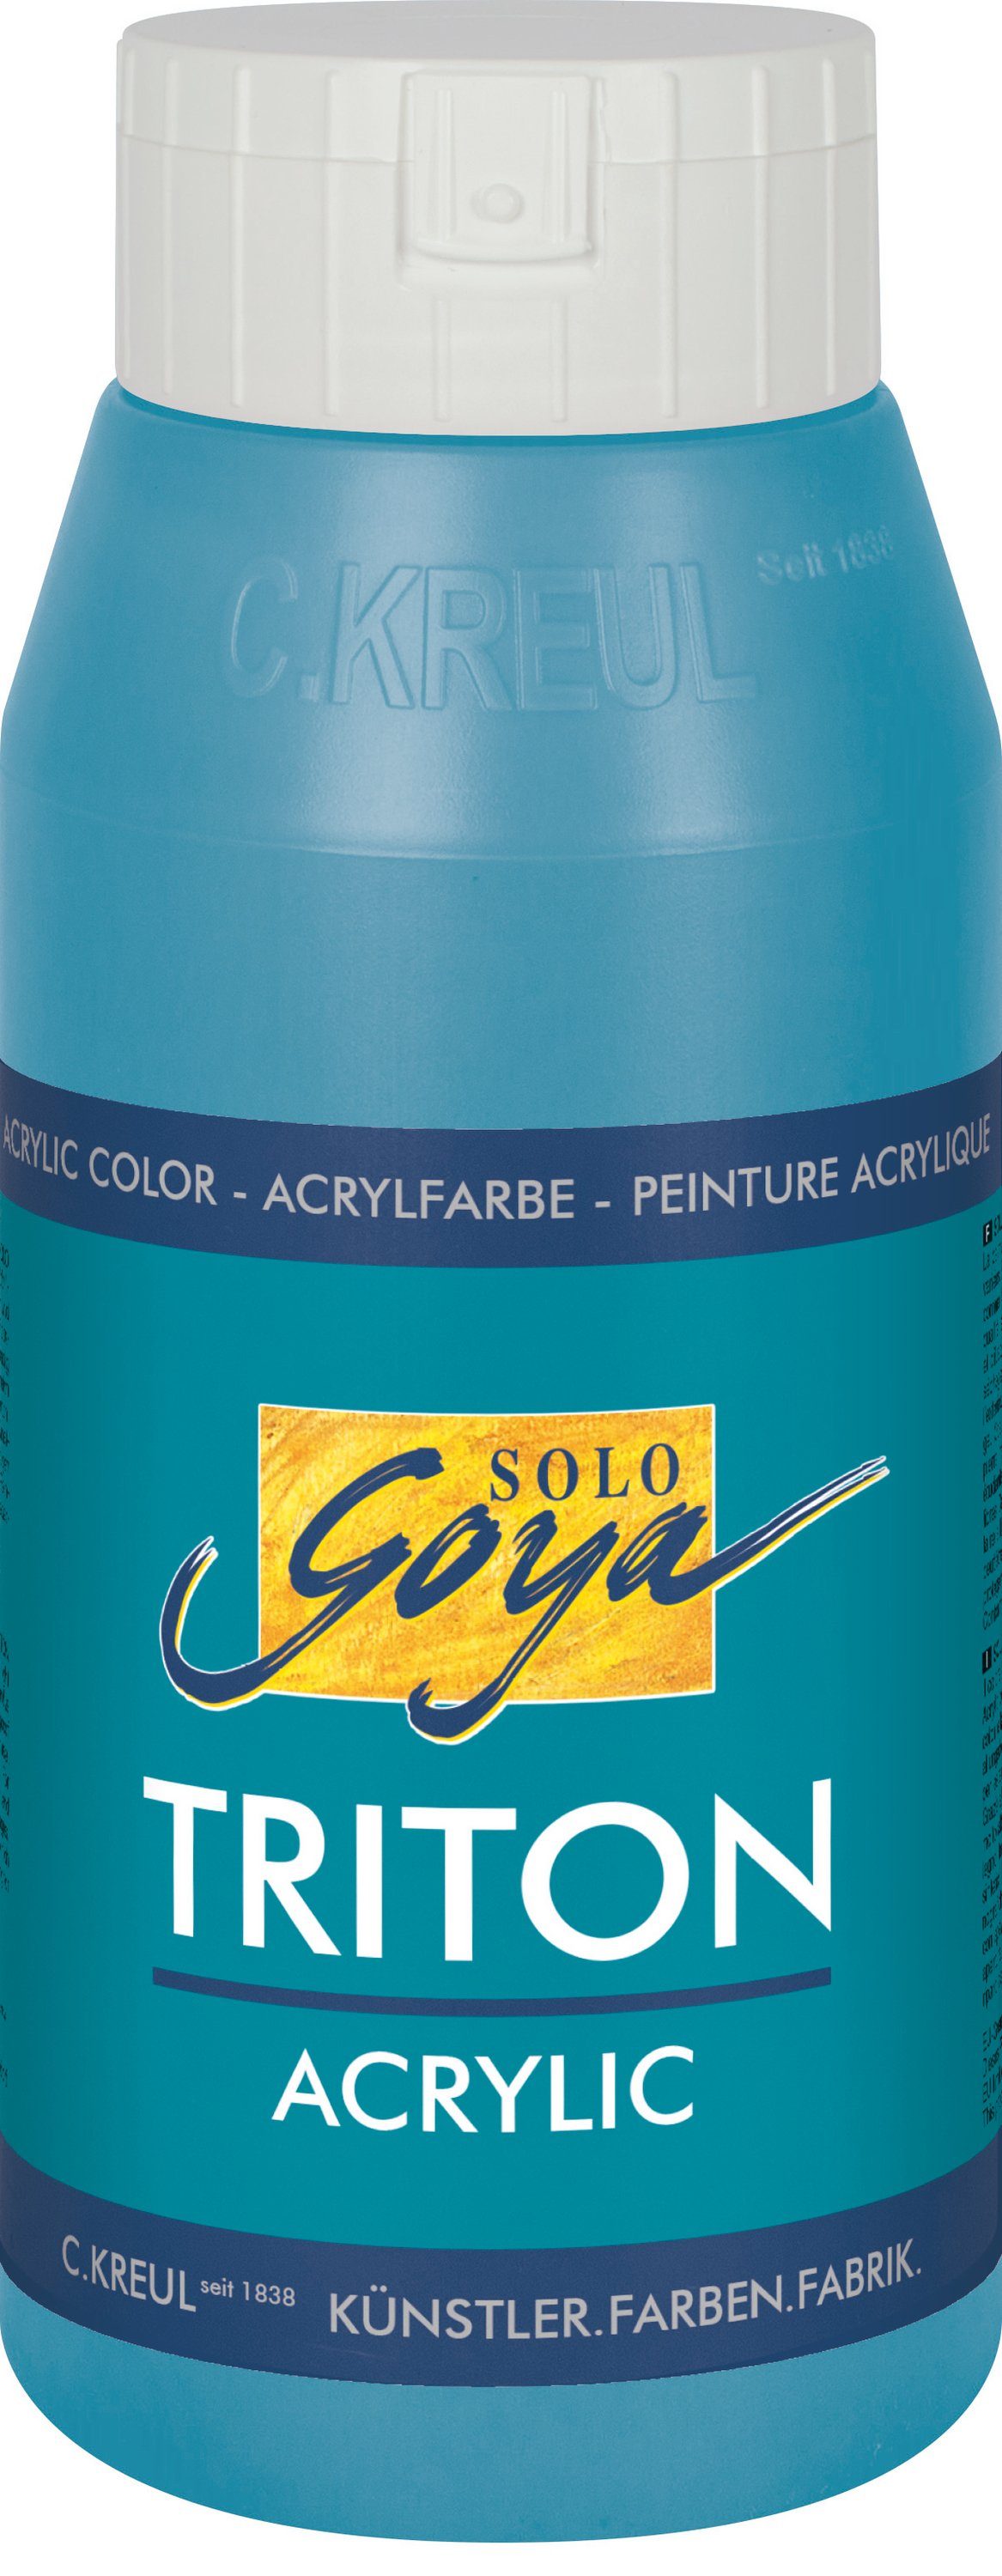 Kreul Acrylfarbe Solo Goya Triton Acrylic, 750 ml Türkisblau